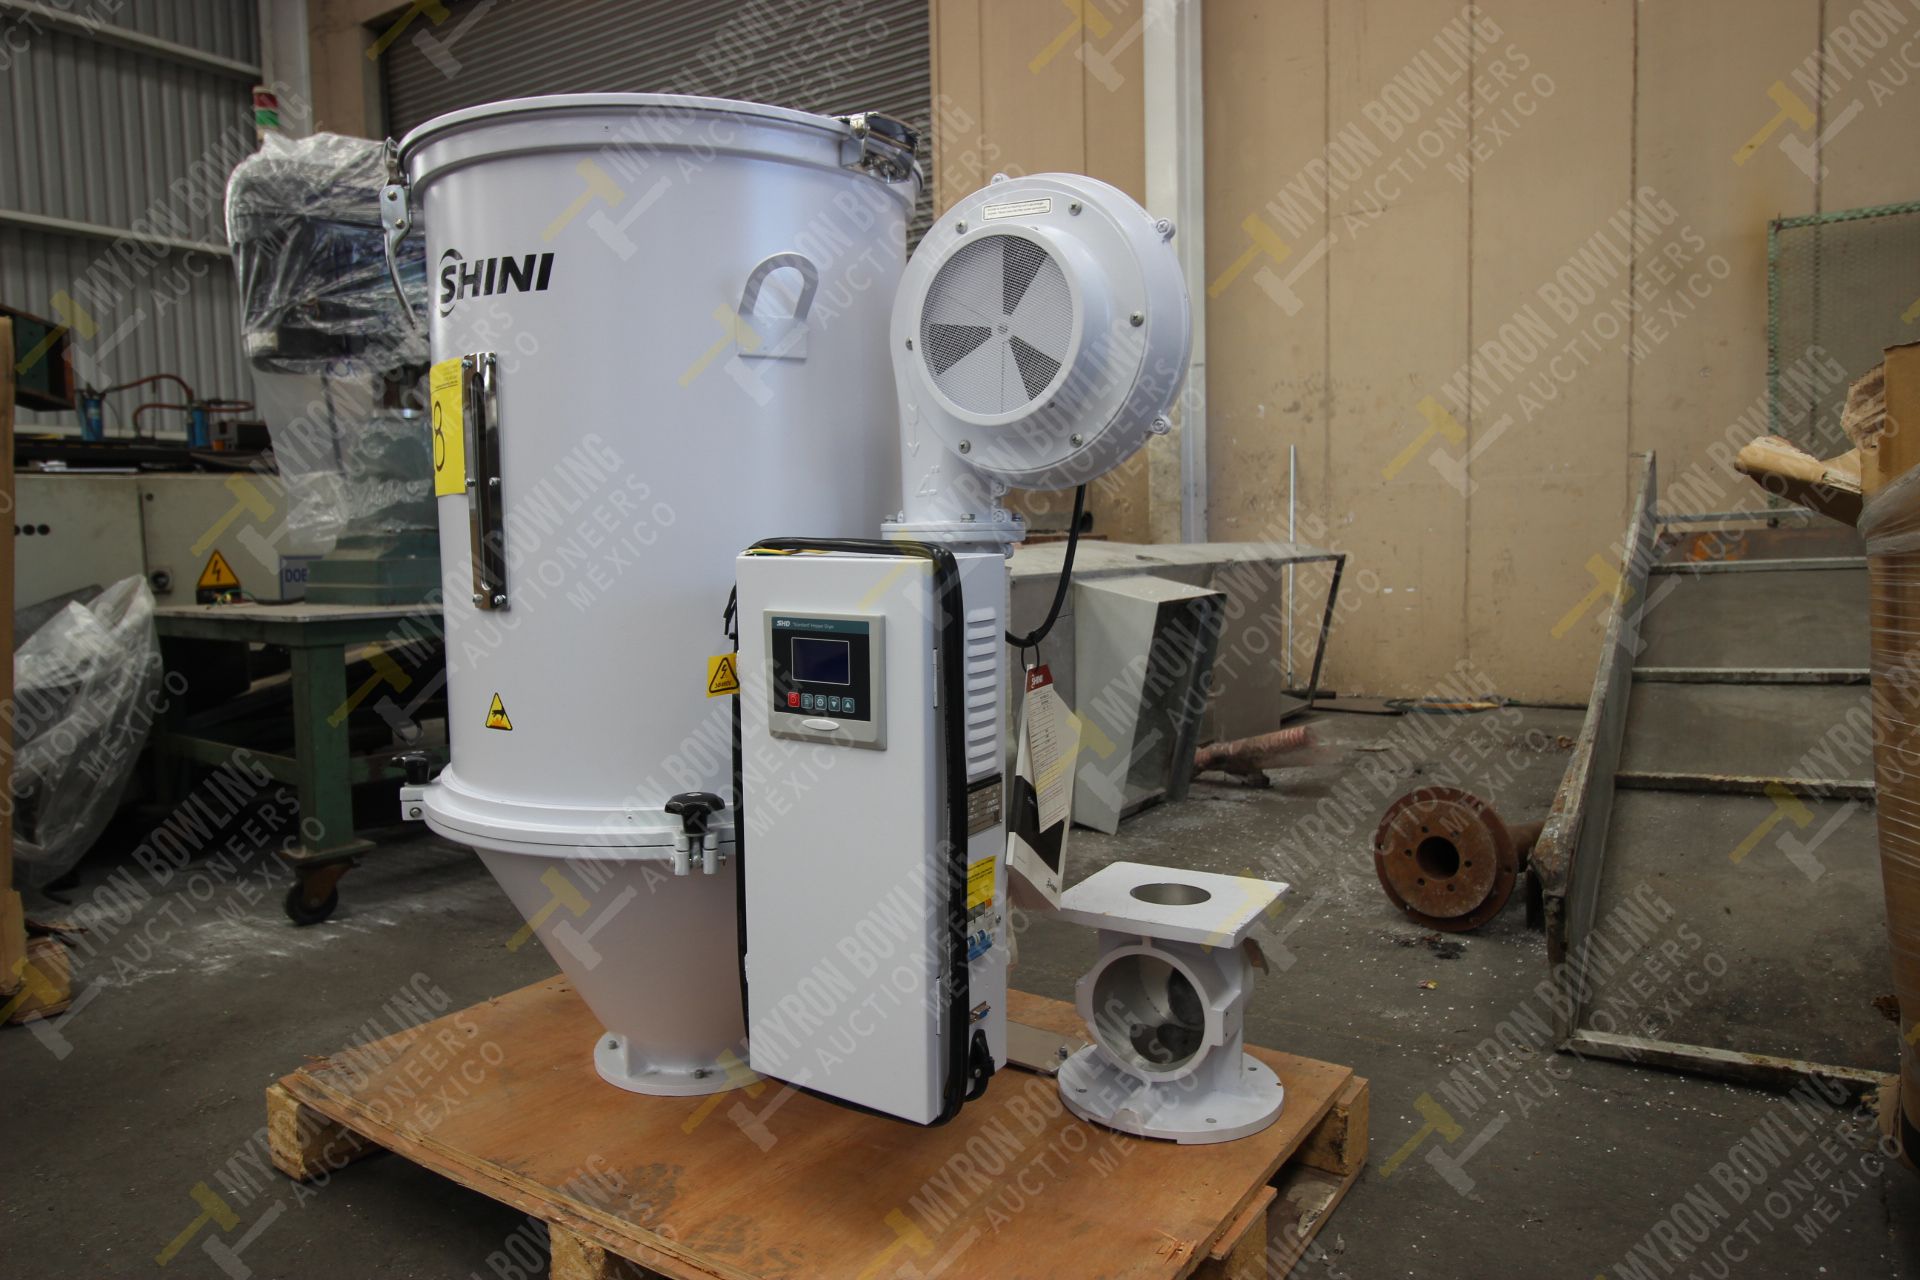 Shini Plastics Technologies 100kg. hopper dryer mod. SHD-100SL-CE, serial number 2HD16100383 - Image 5 of 15